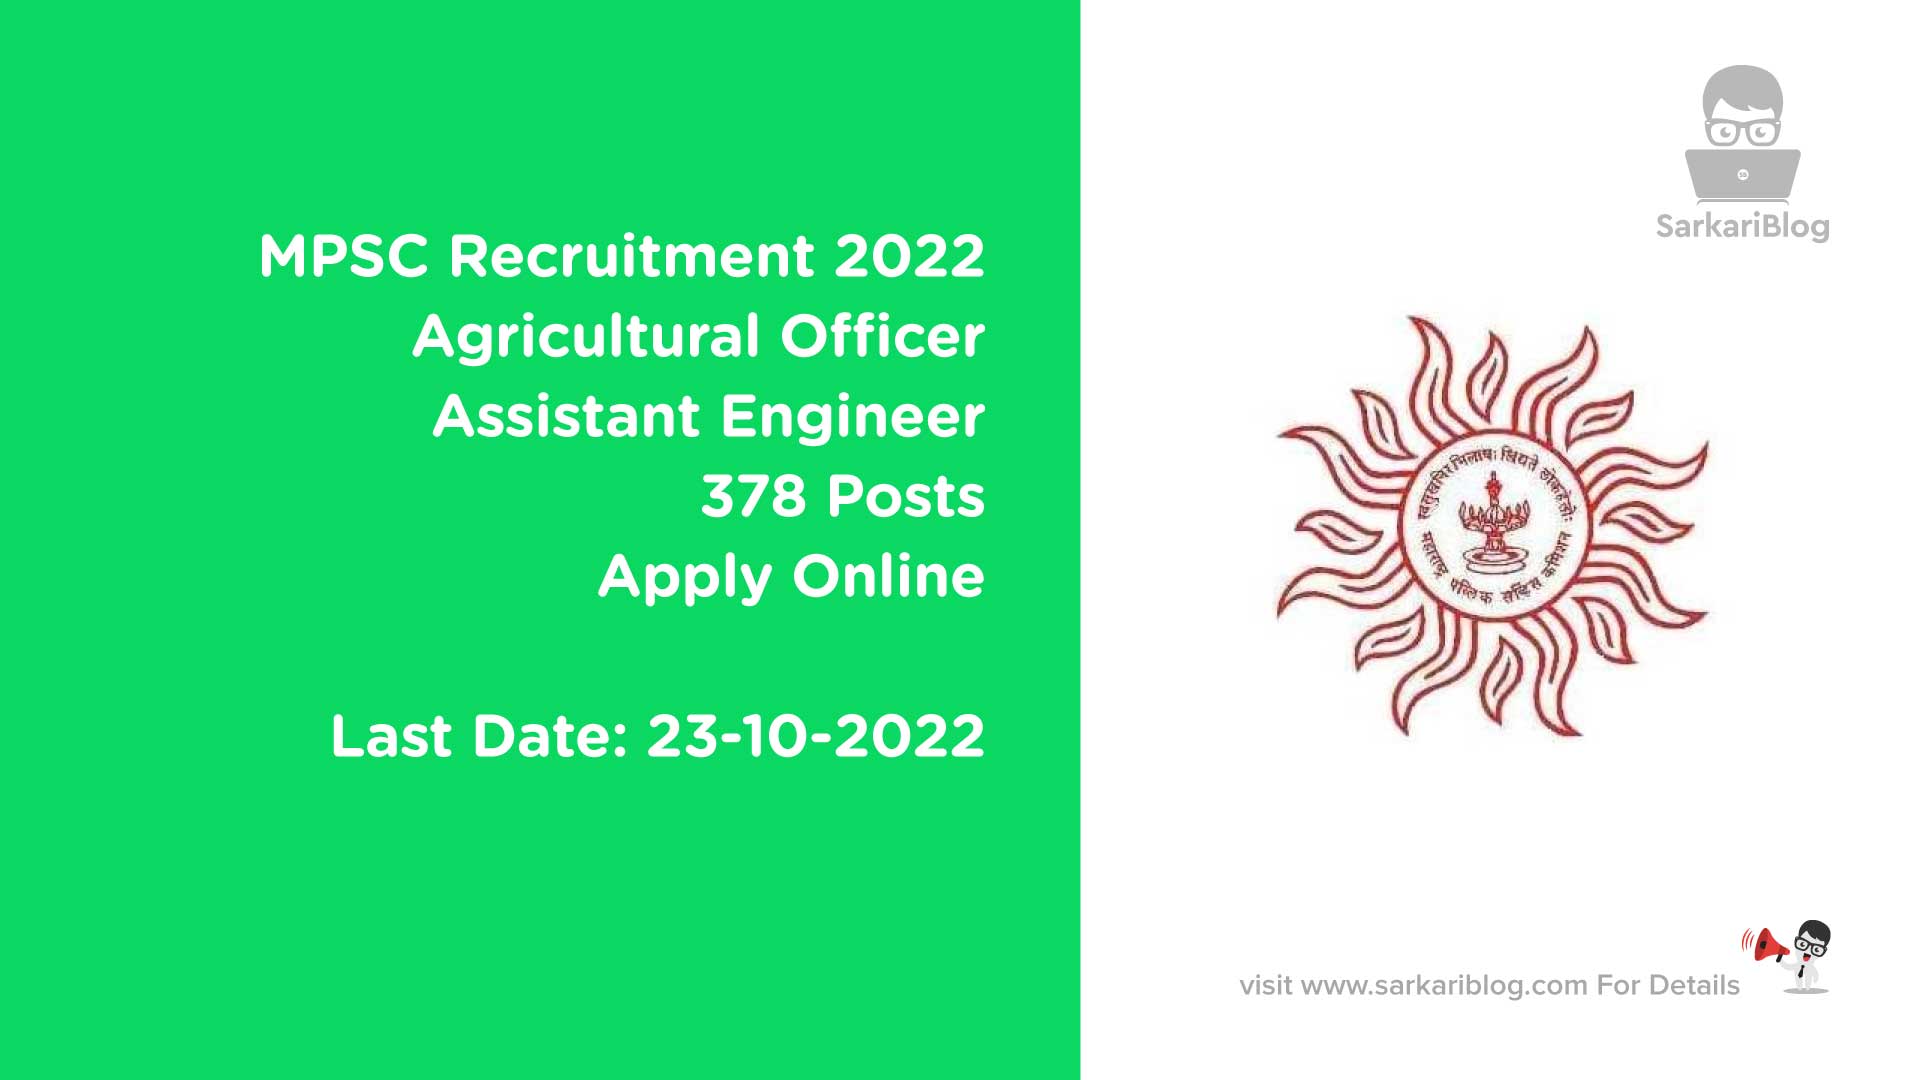 MPSC AO Recruitment 2022